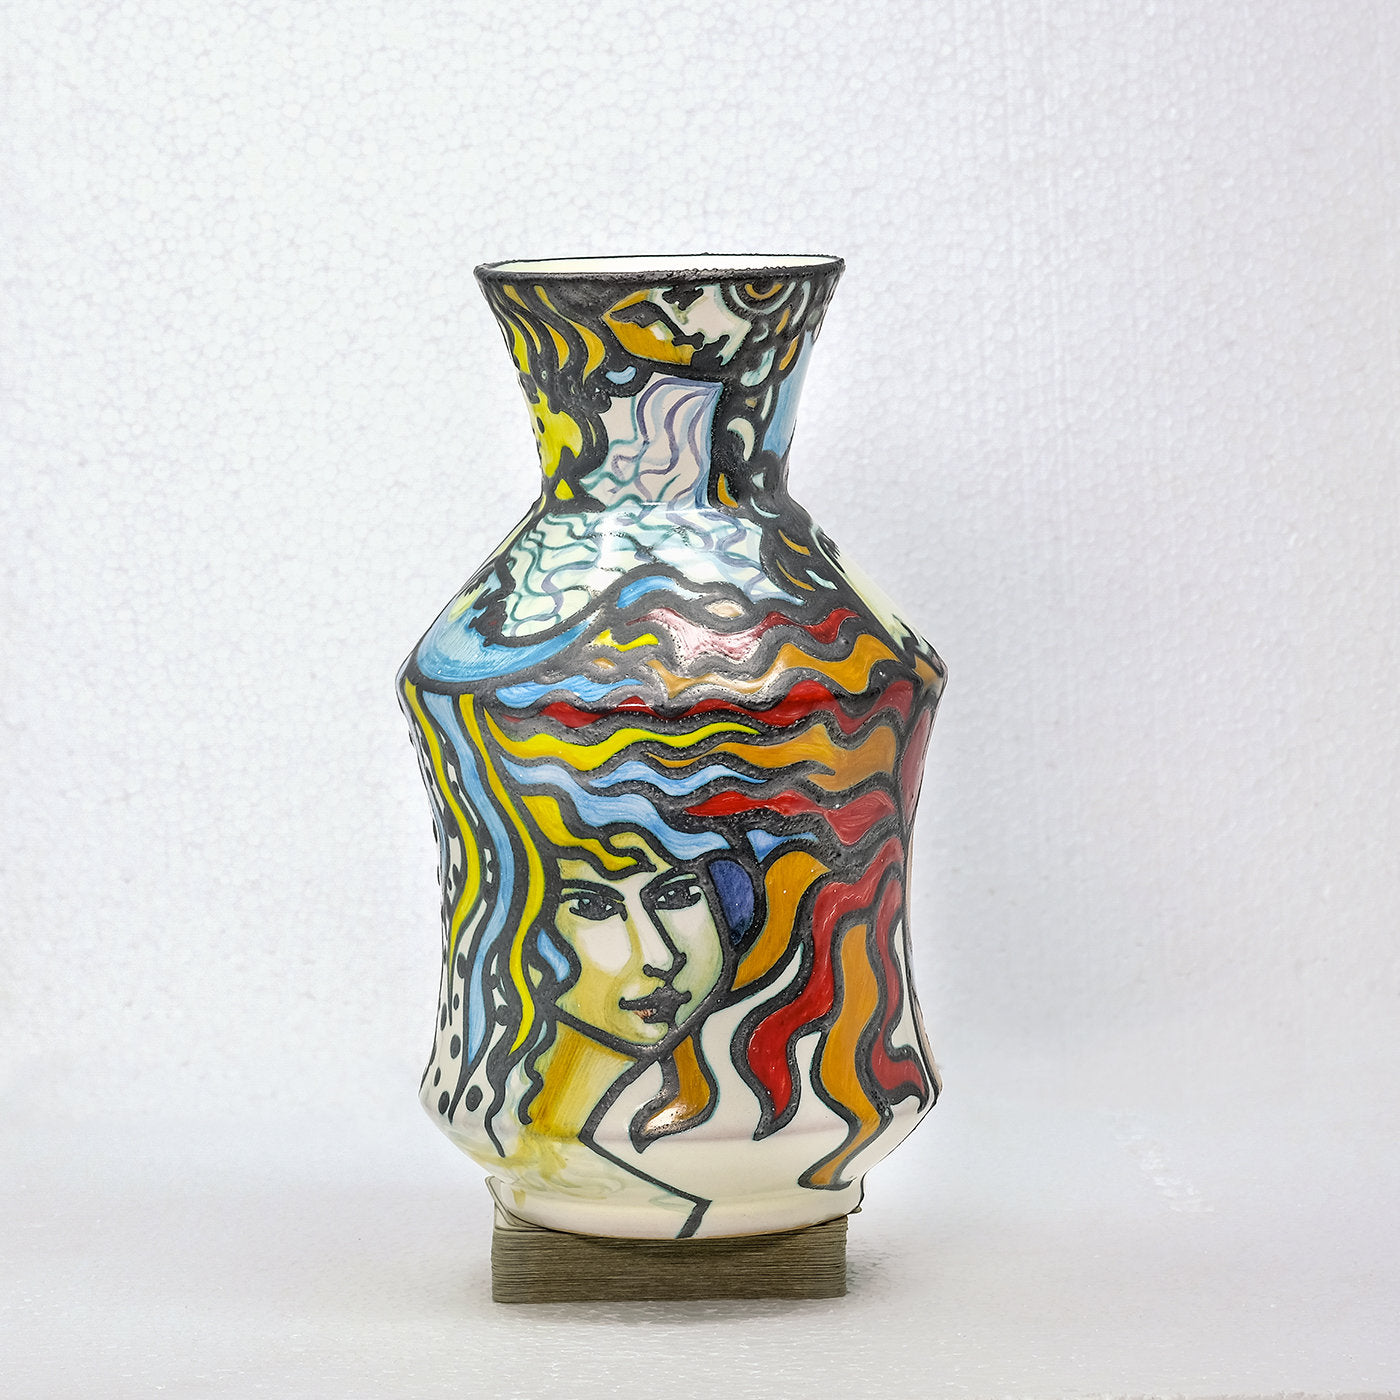 Abstract Ceramic Flower Vase #1 - Alternative view 2